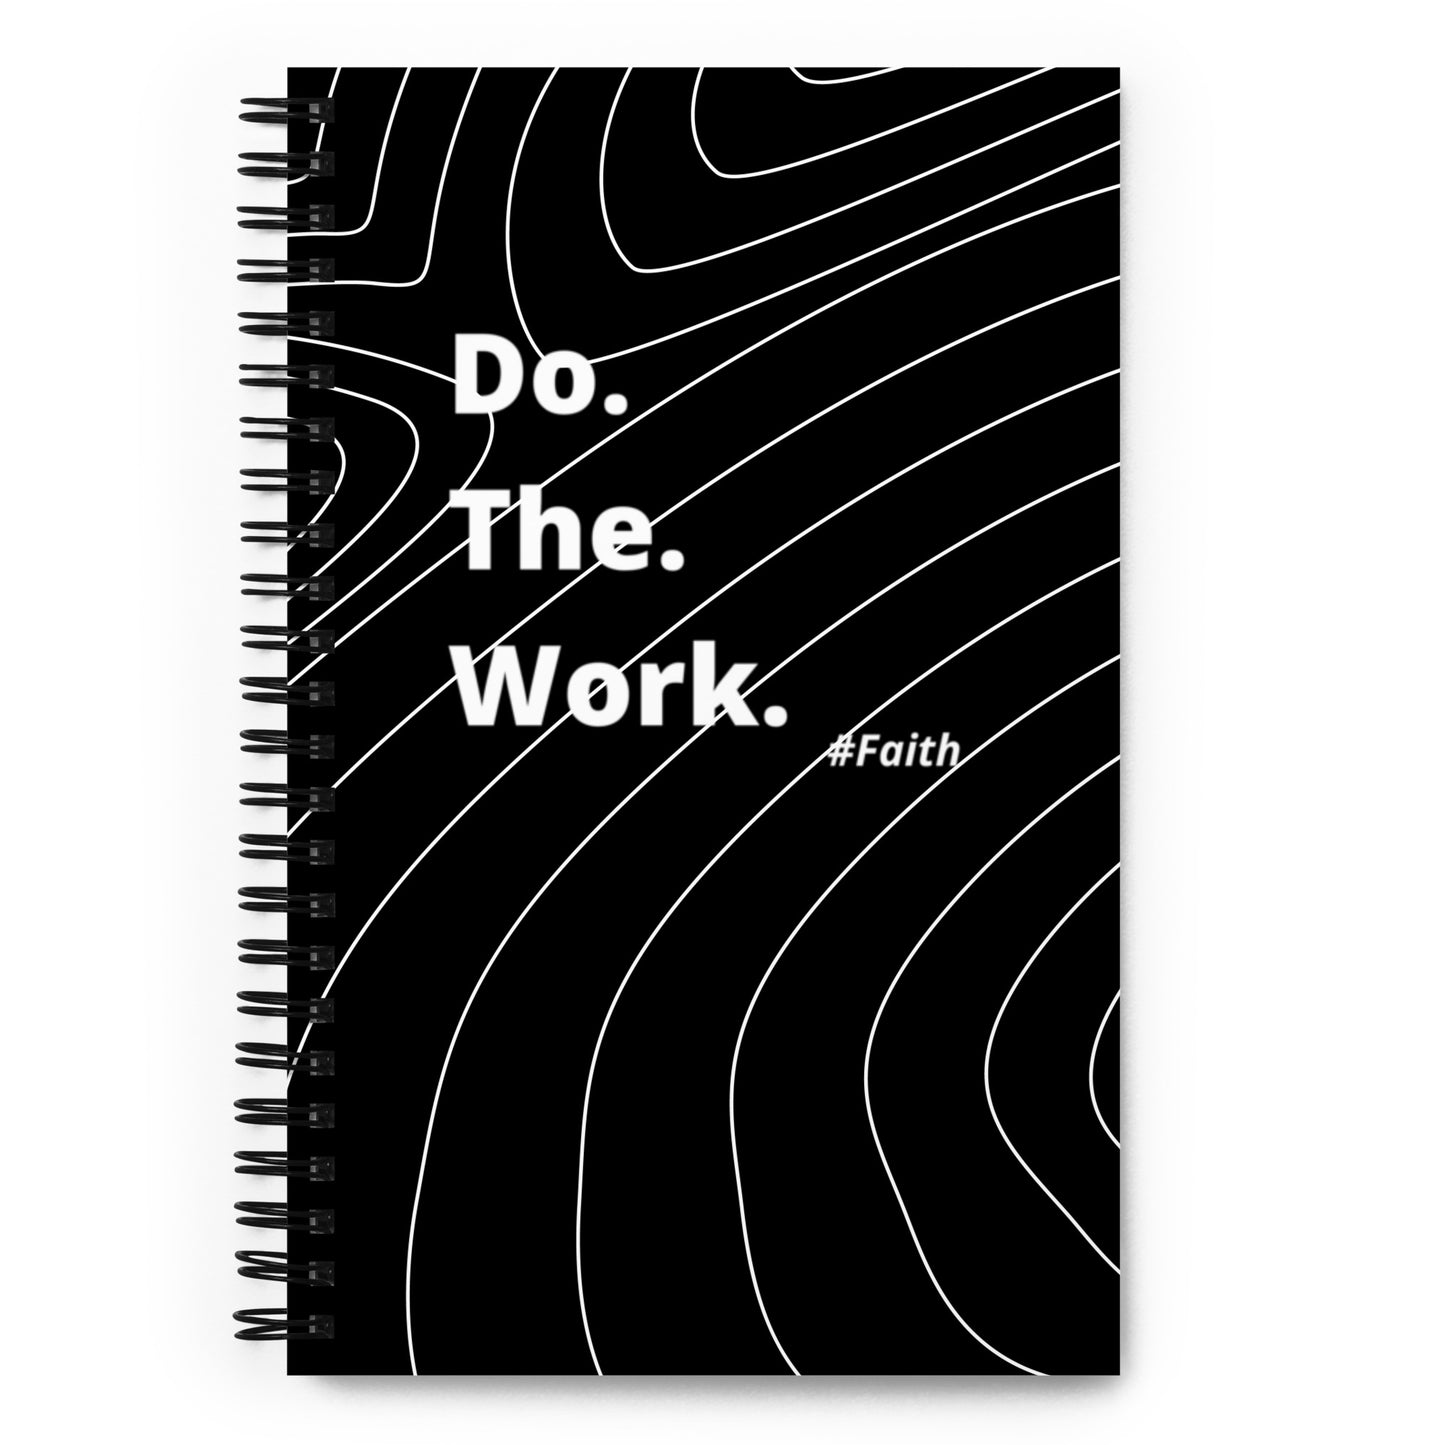 Do. The. Work. Spiral Notebook